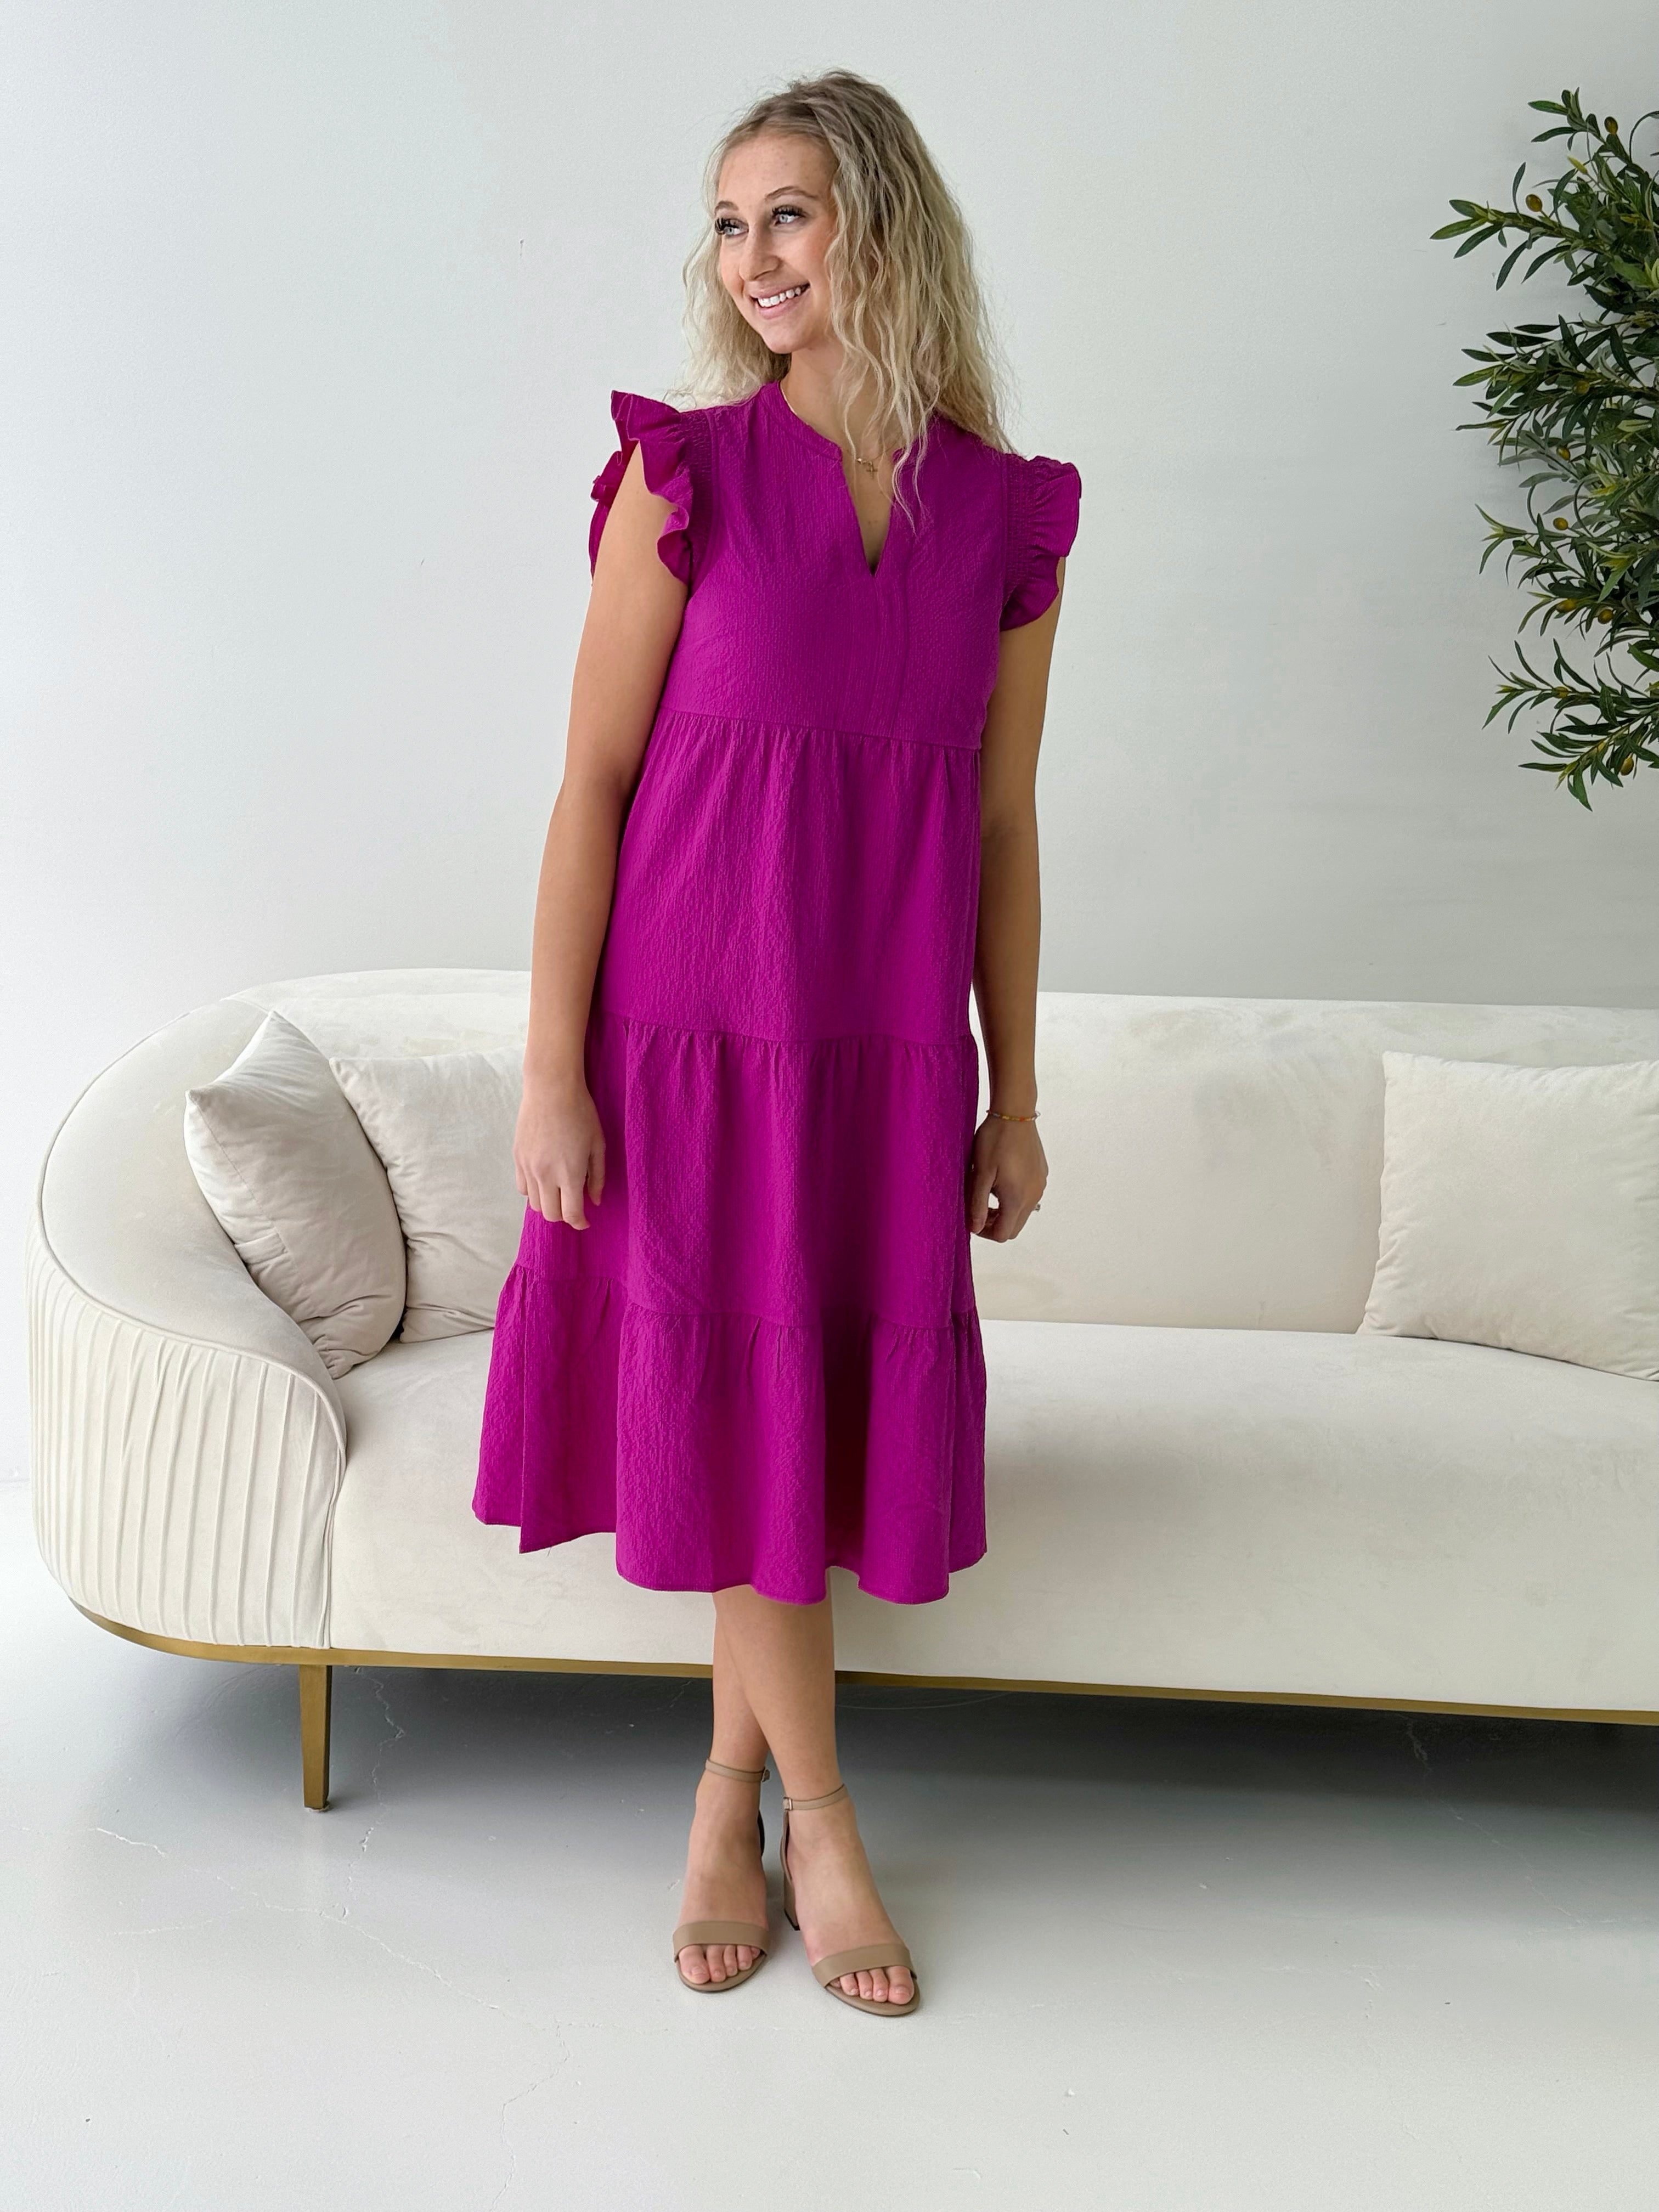 THML Ruffle Sleeve Tiered Dress in Fuchsia-152 Dresses - Long-Little Bird Boutique